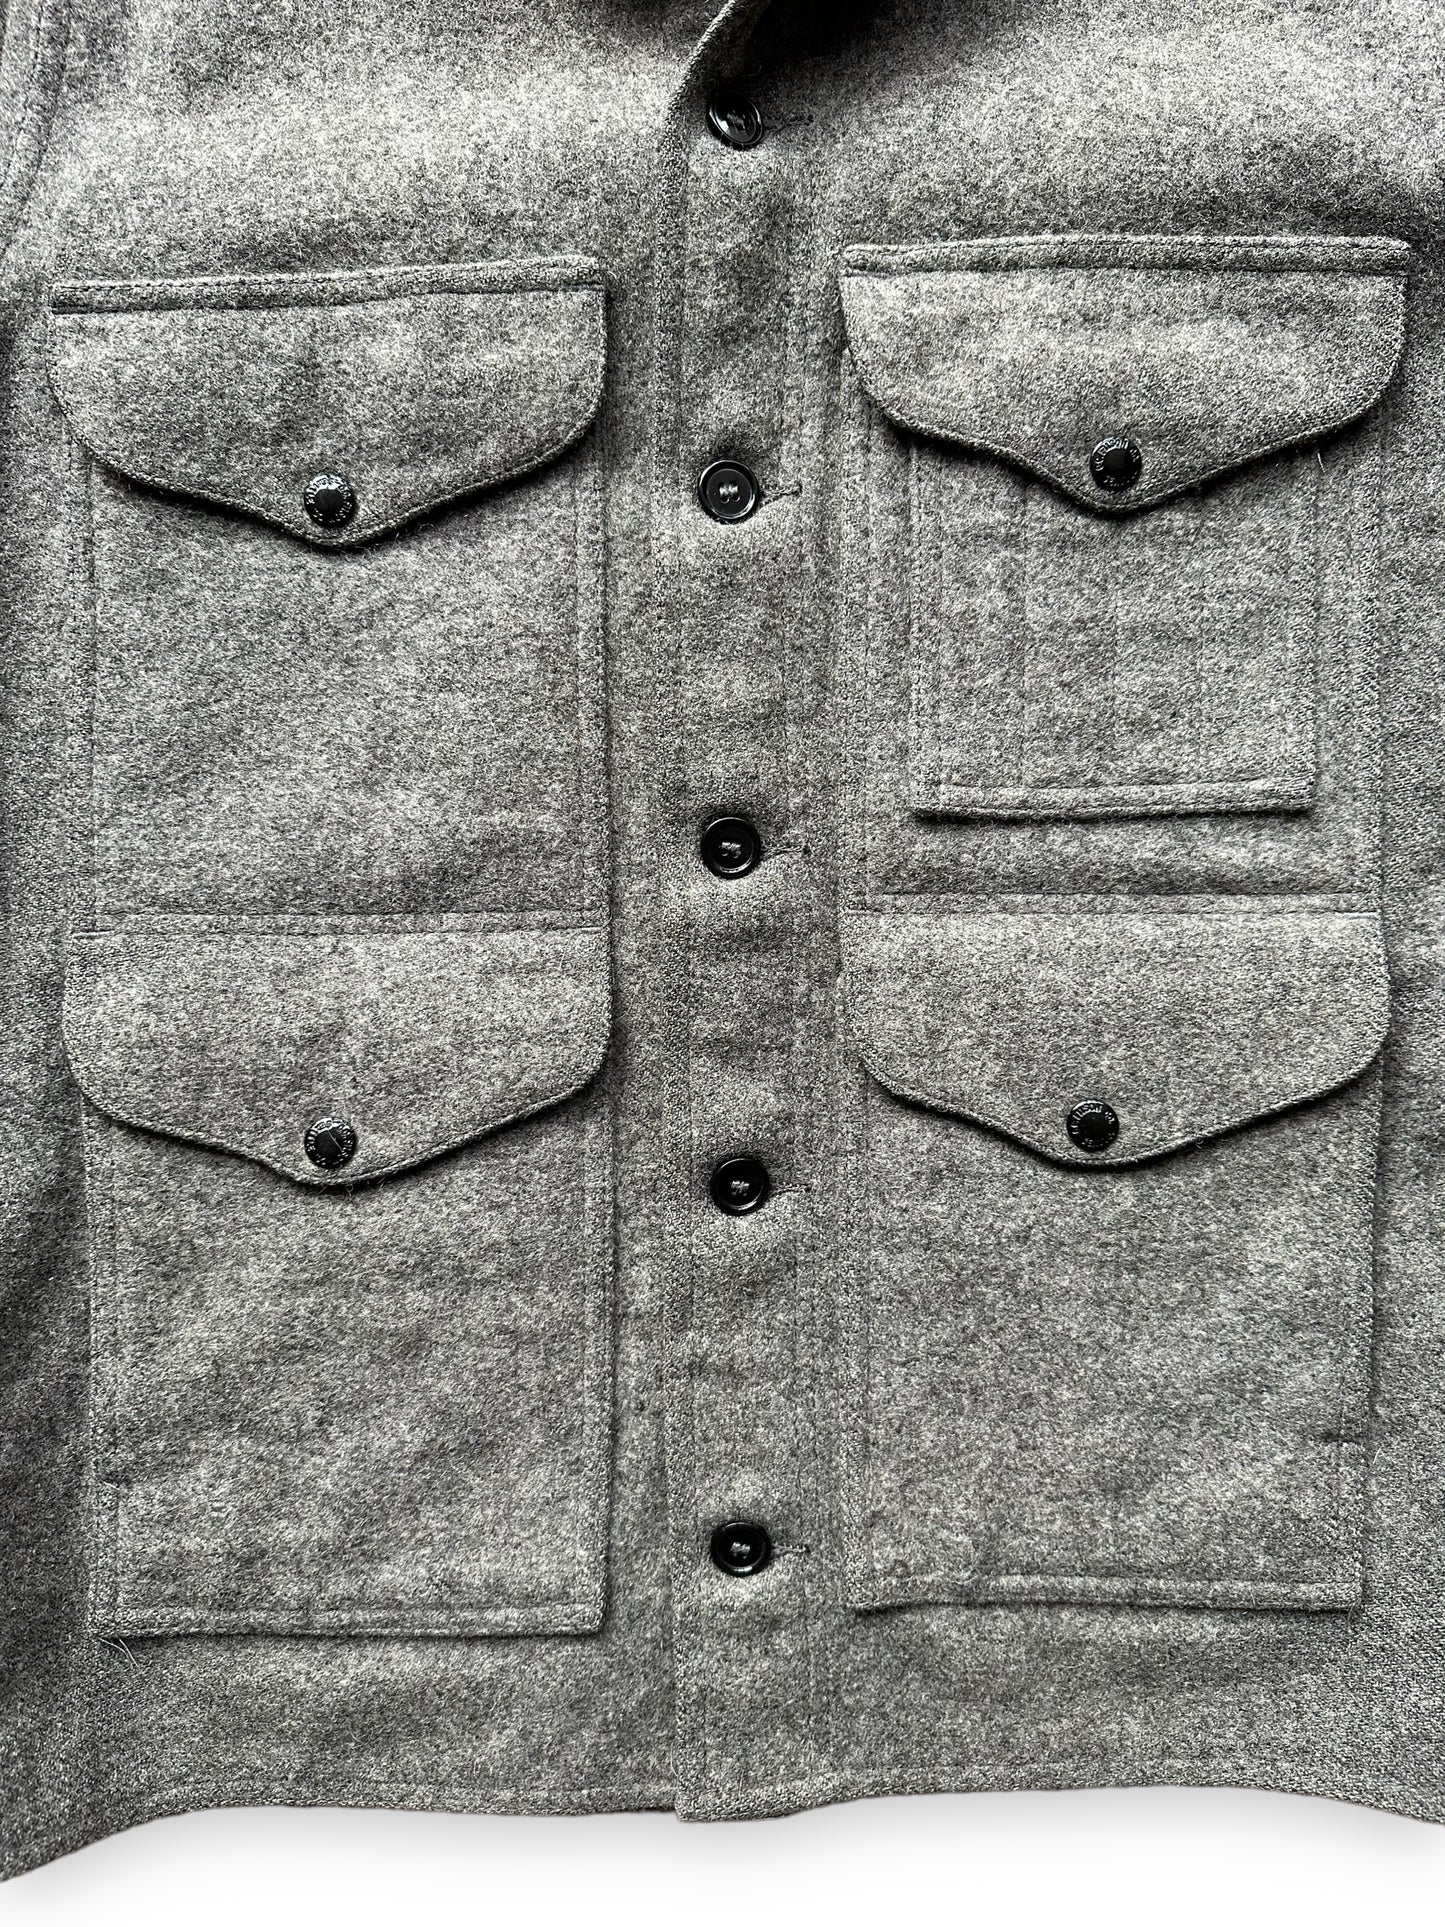 Front Pocket Detail on Vintage Filson Grey Mackinaw Cruiser SZ 38 |  Barn Owl Vintage Goods | Vintage Workwear Seattle